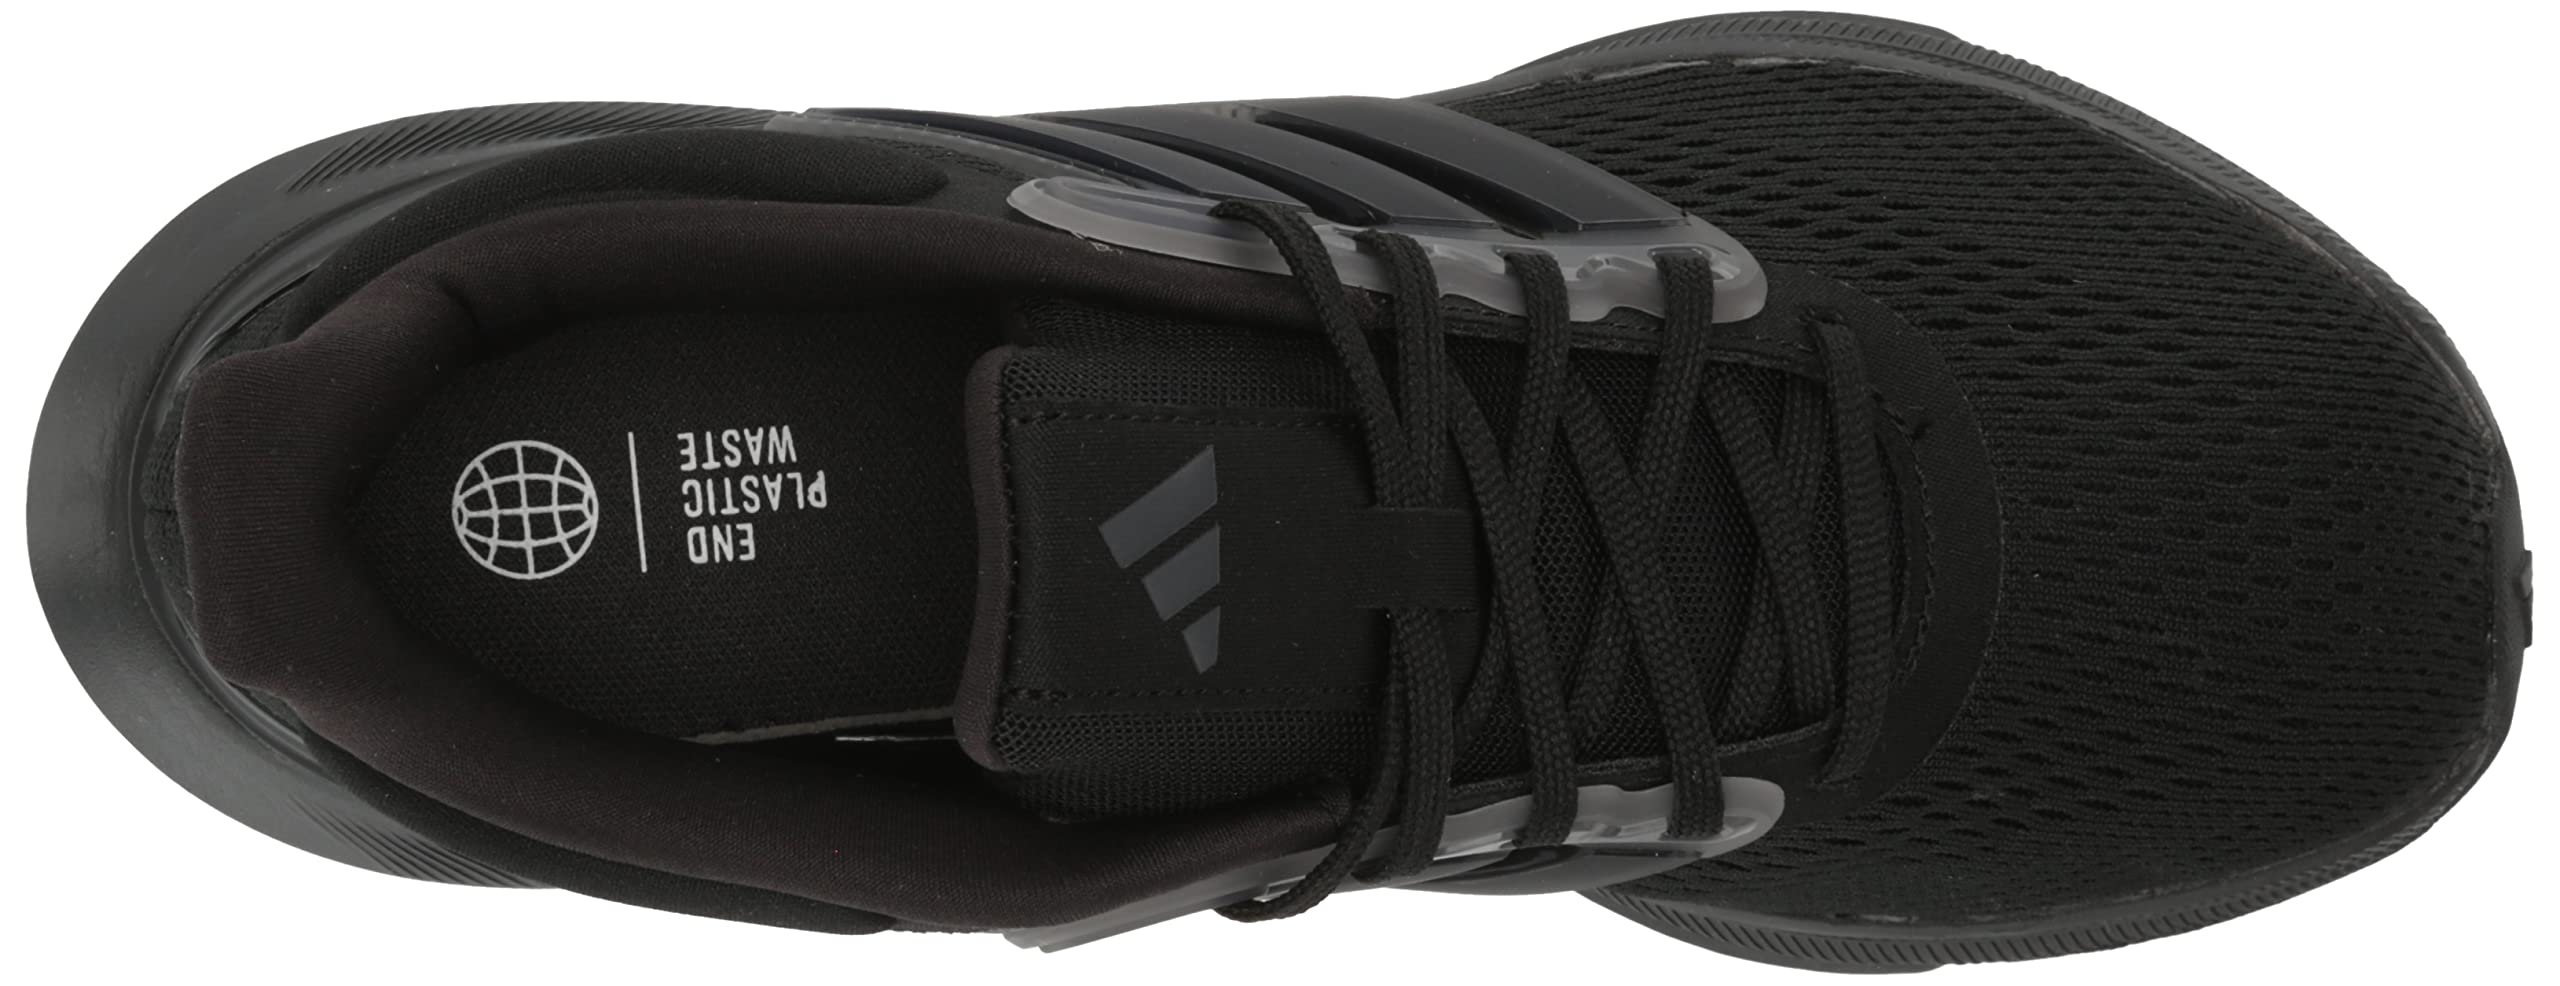 adidas Women's Ultrabounce Running Shoe